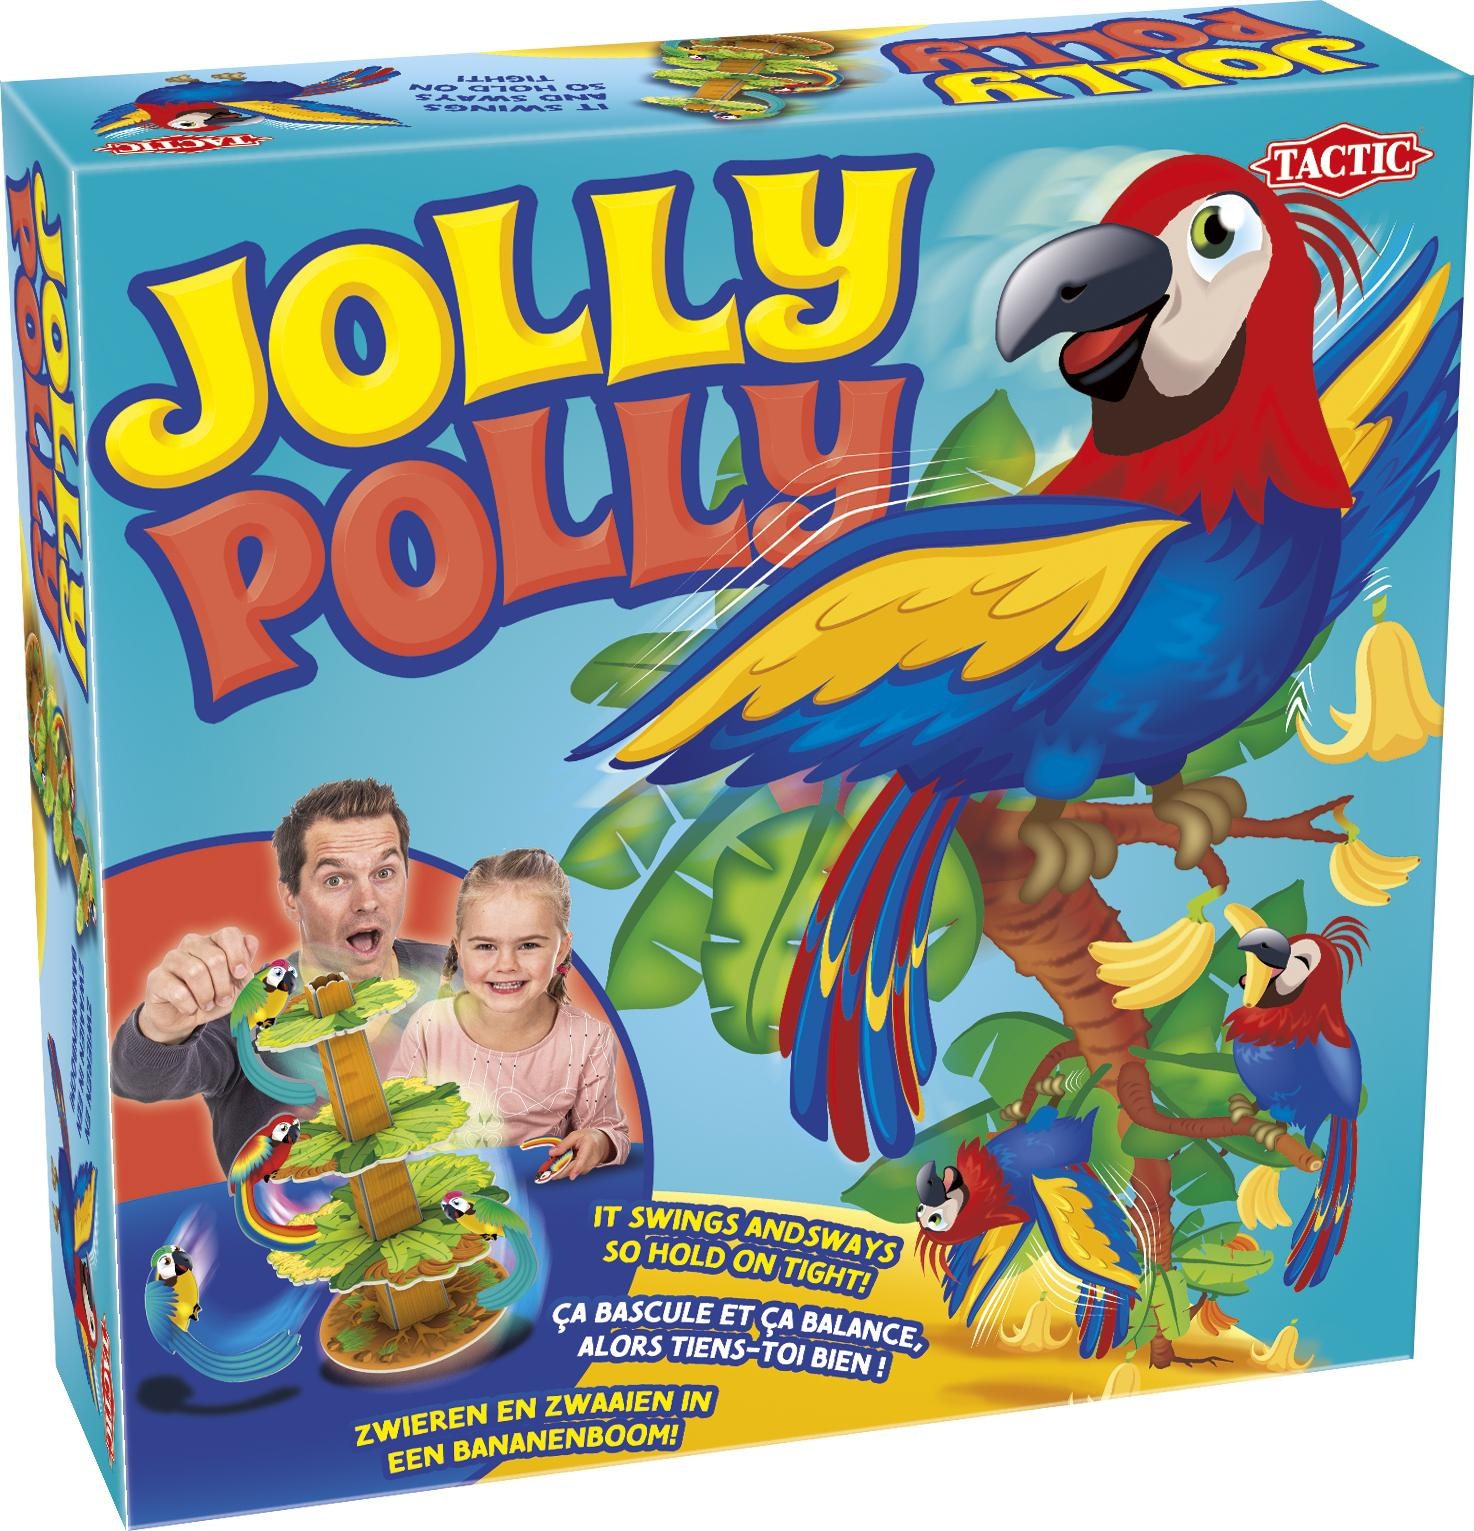 Tactic Jolly Polly Kinderspiel